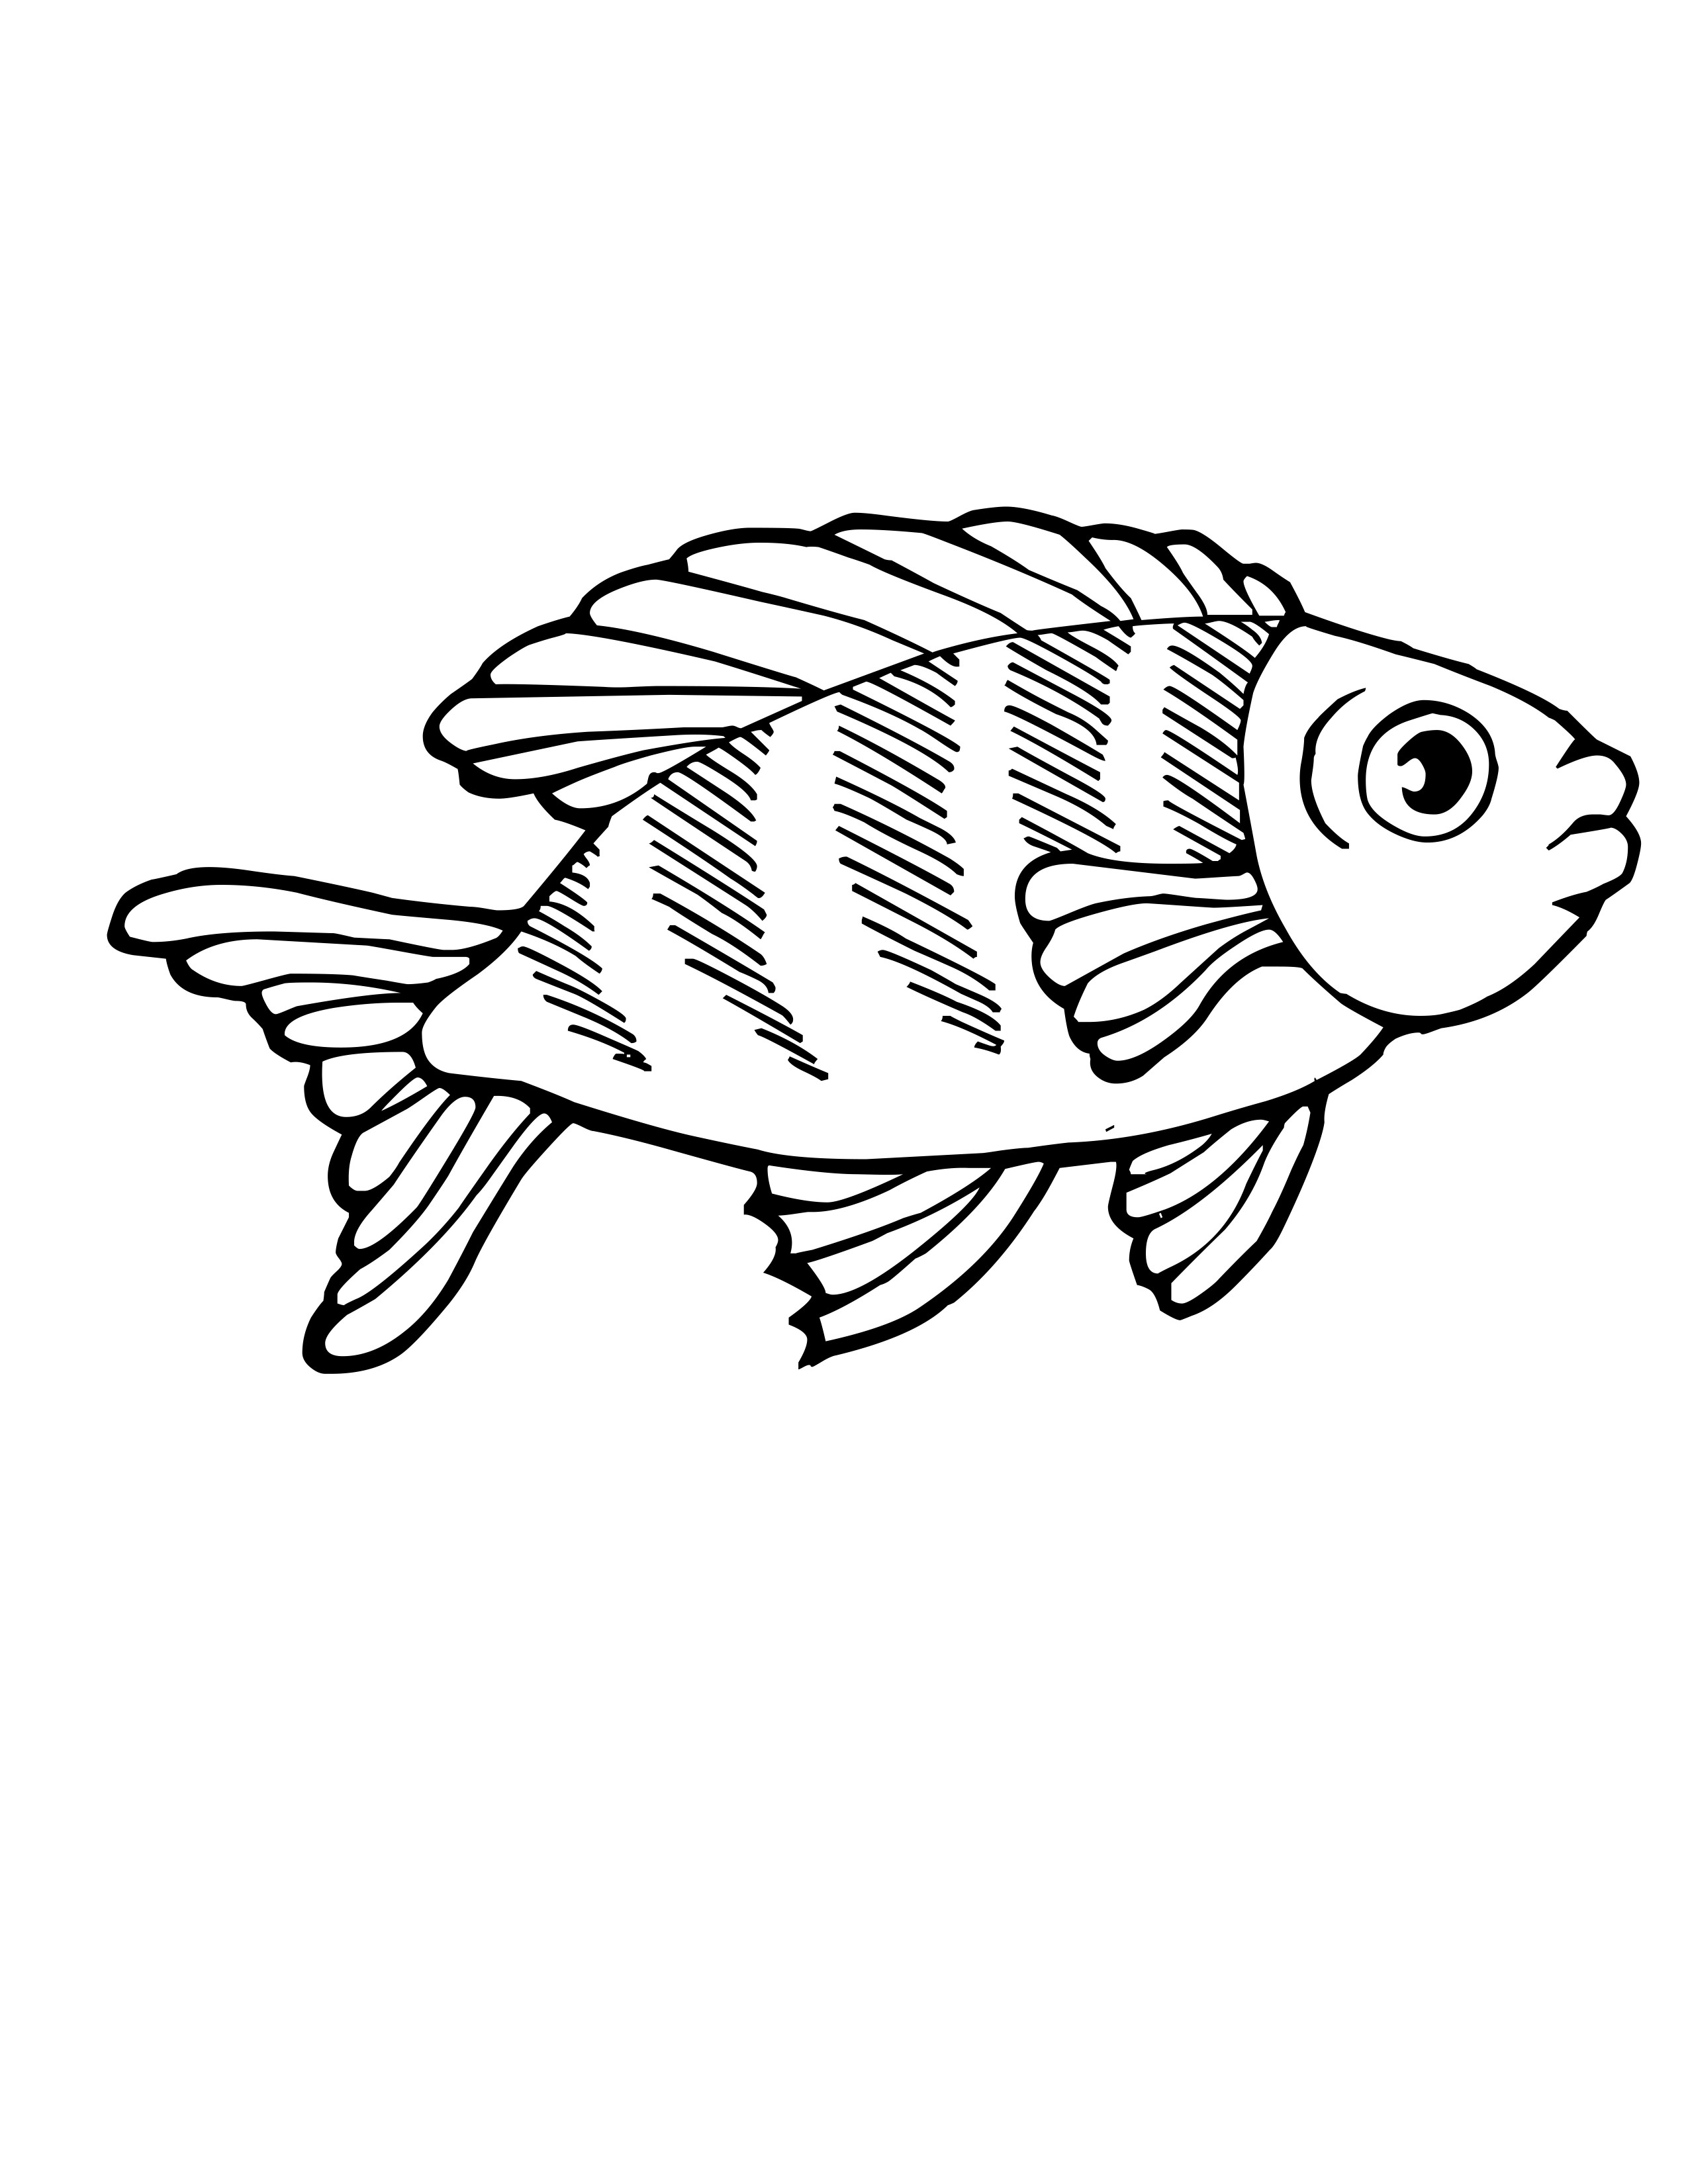 Koi Fish Coloring Page - Cliparts.co